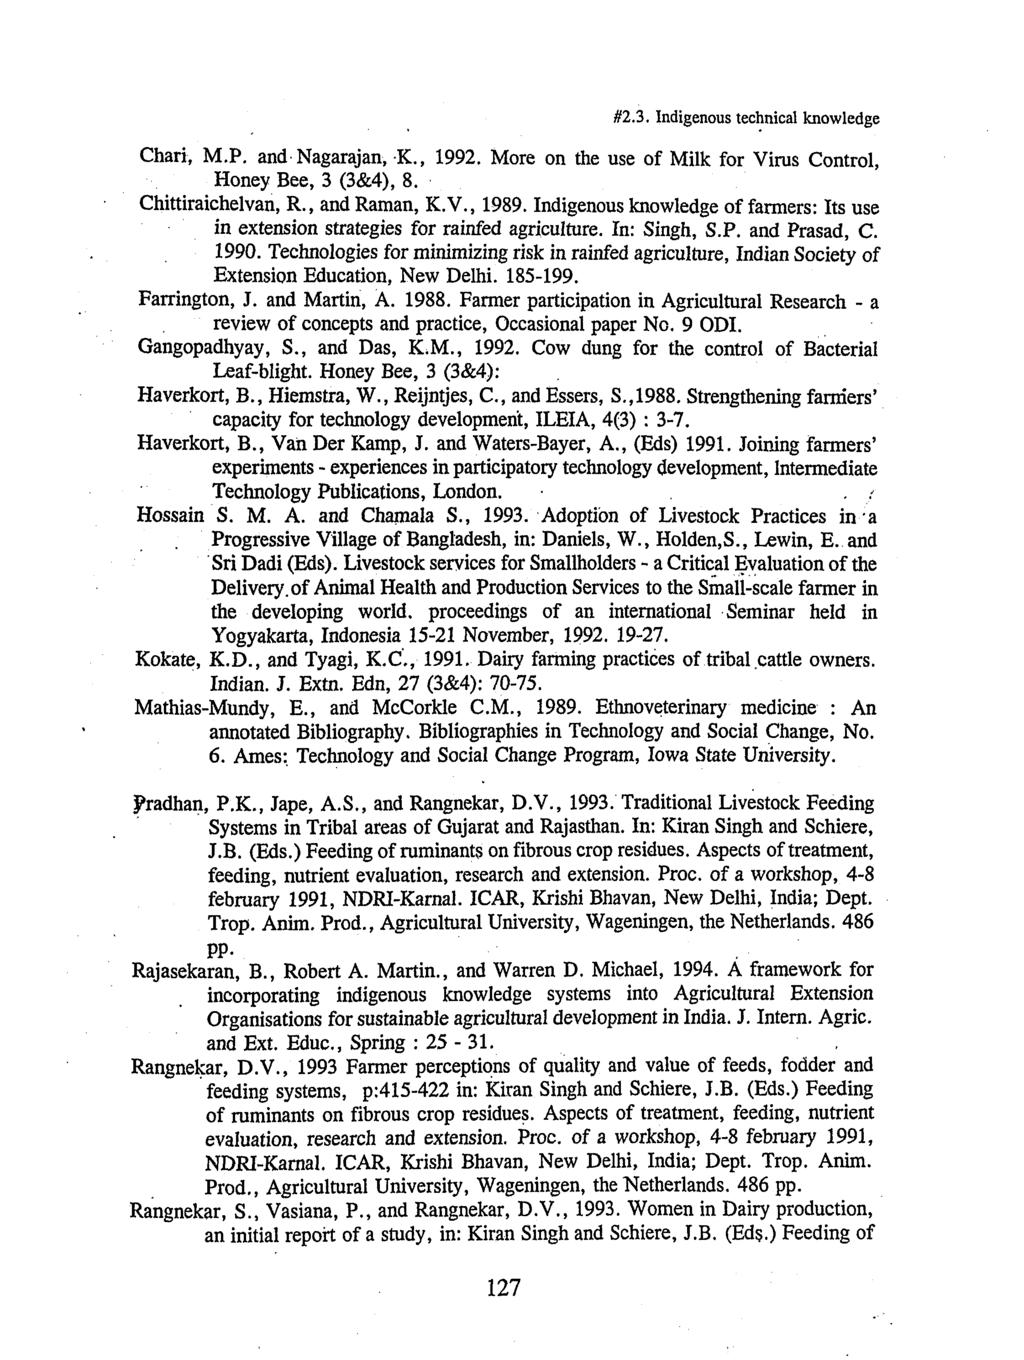 #2.3. Indigenous technical knowledge Chari, M.P. and Nagarajan, K., 1992. More on the use of Milk for Virus Control, Honey Bee, 3 (3&4), 8. Chittiraichelvan, R., and Raman, K.V., 1989.